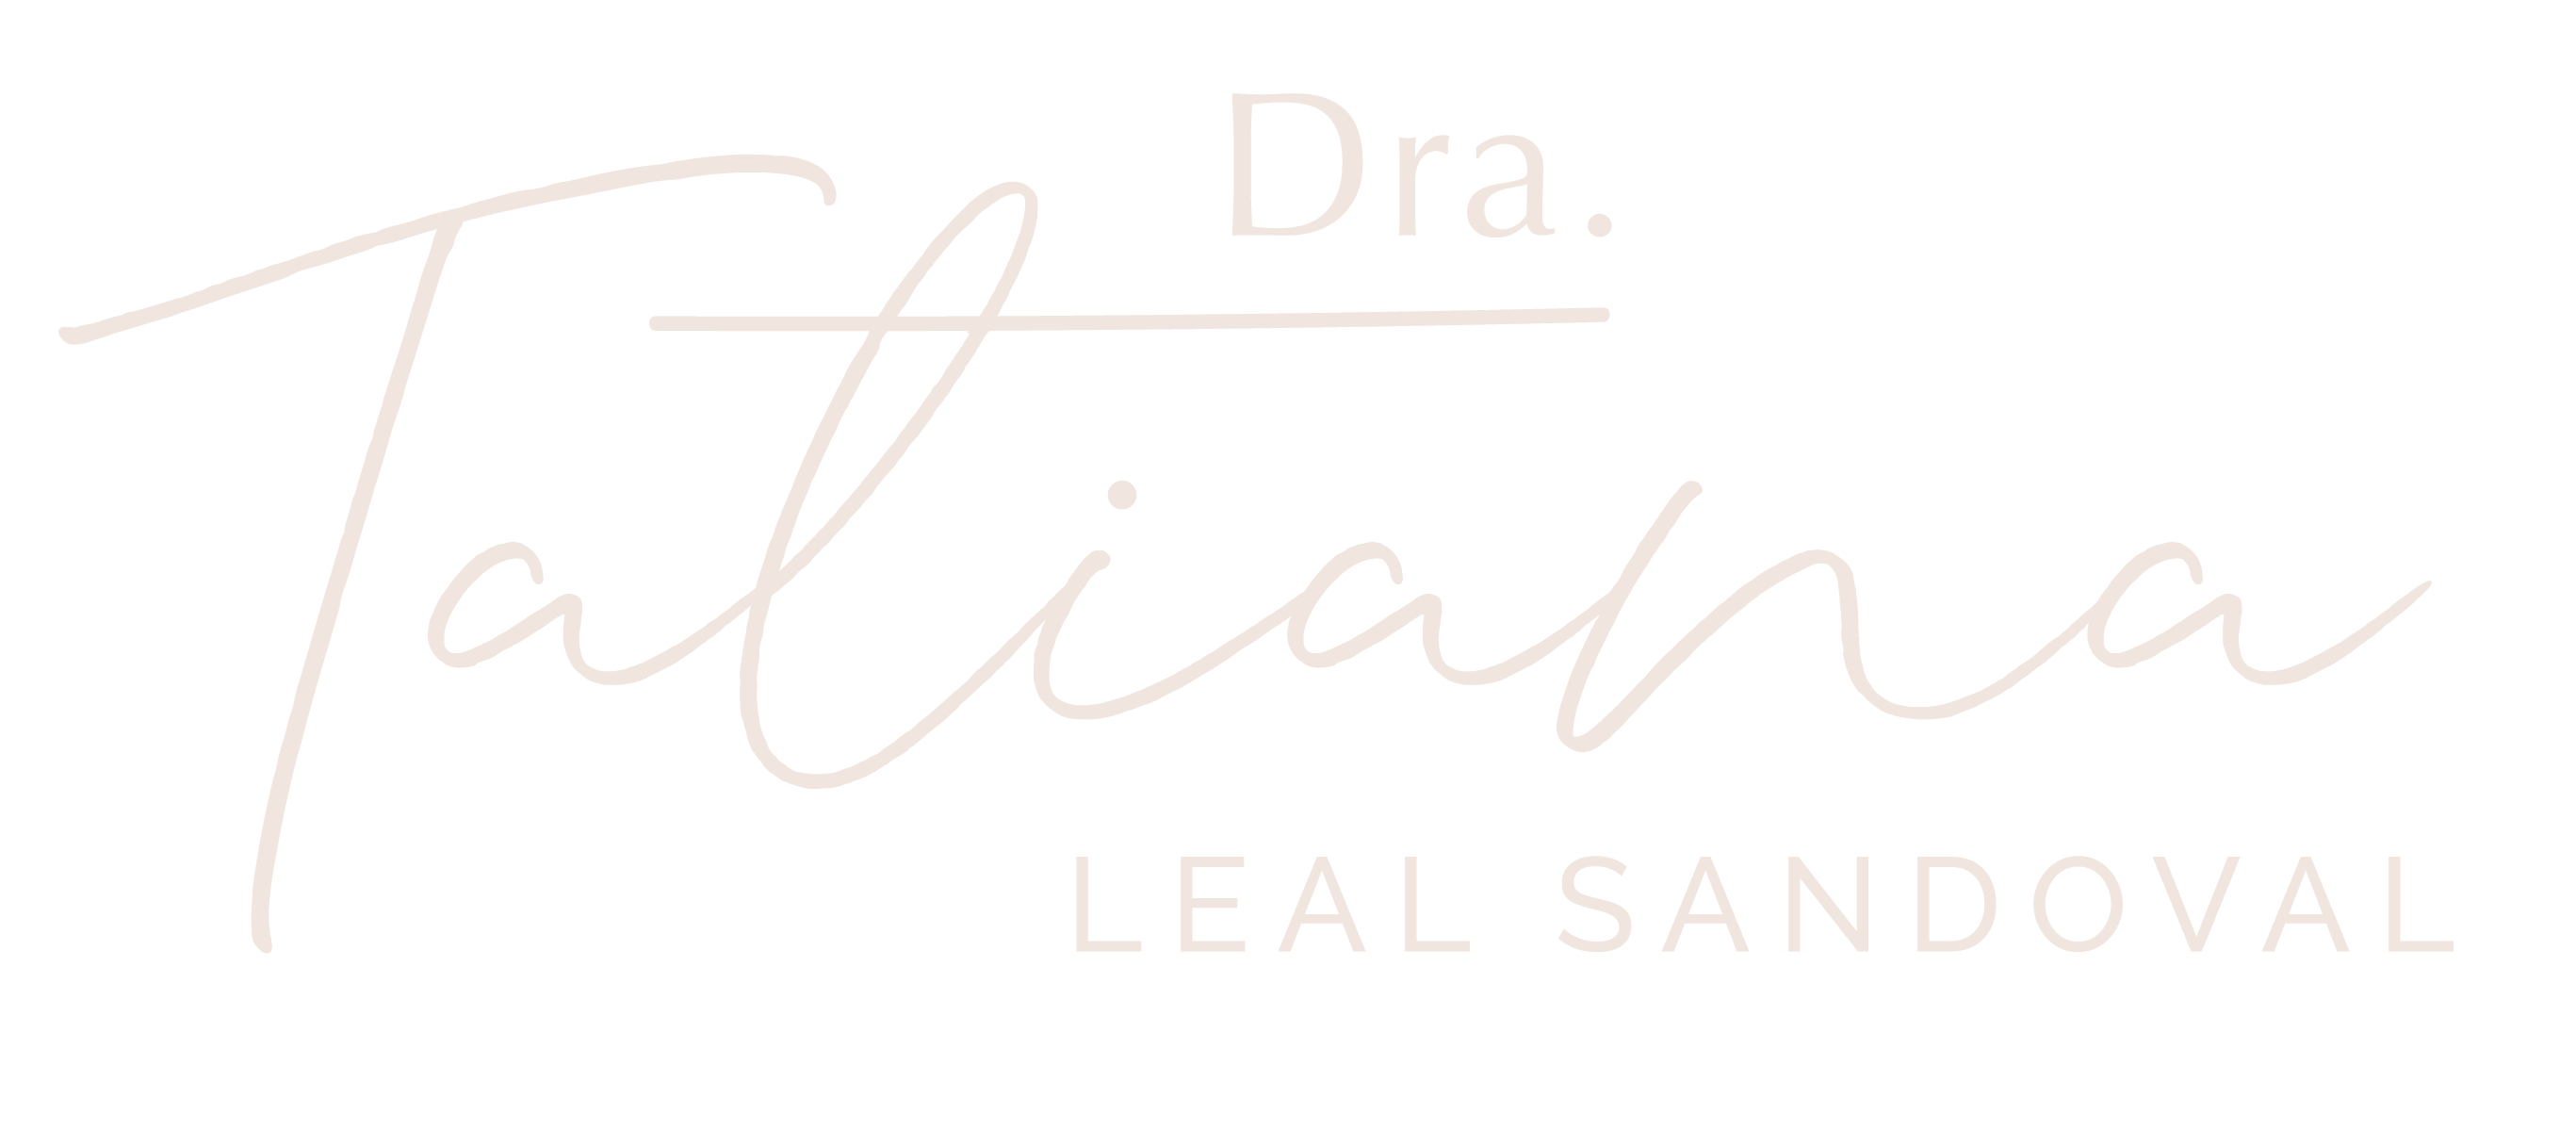 Dra. Tatiana Leal